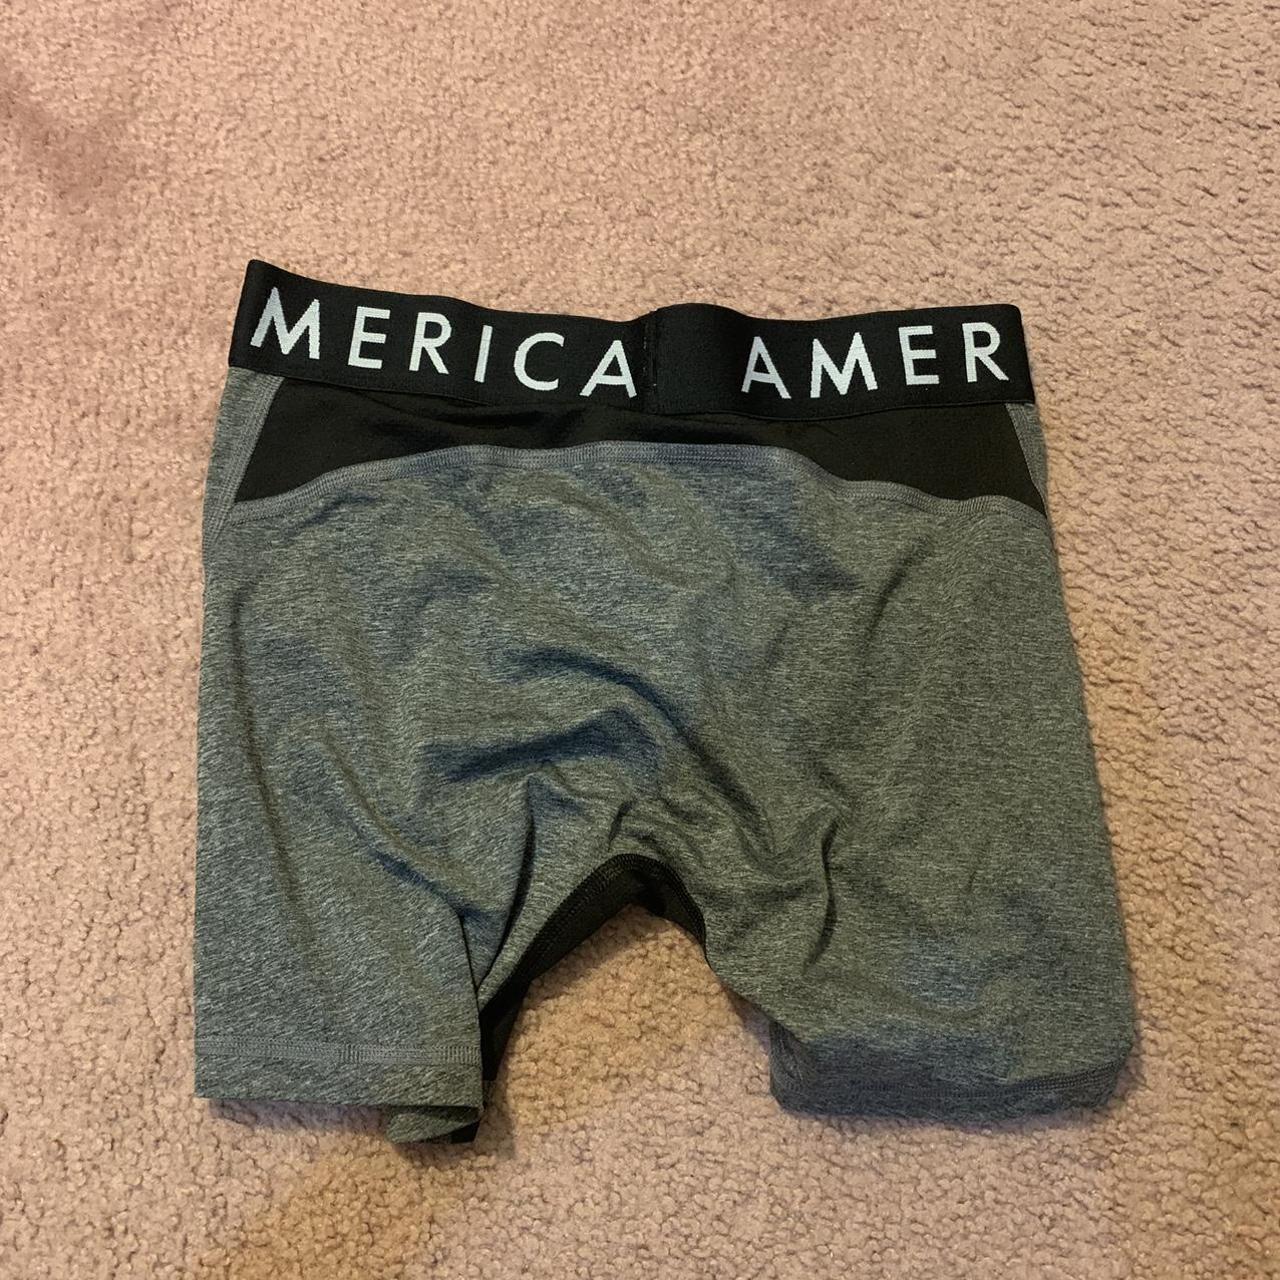 American Eagle 🦅 Underwear/ Briefs Free Shipping - Depop